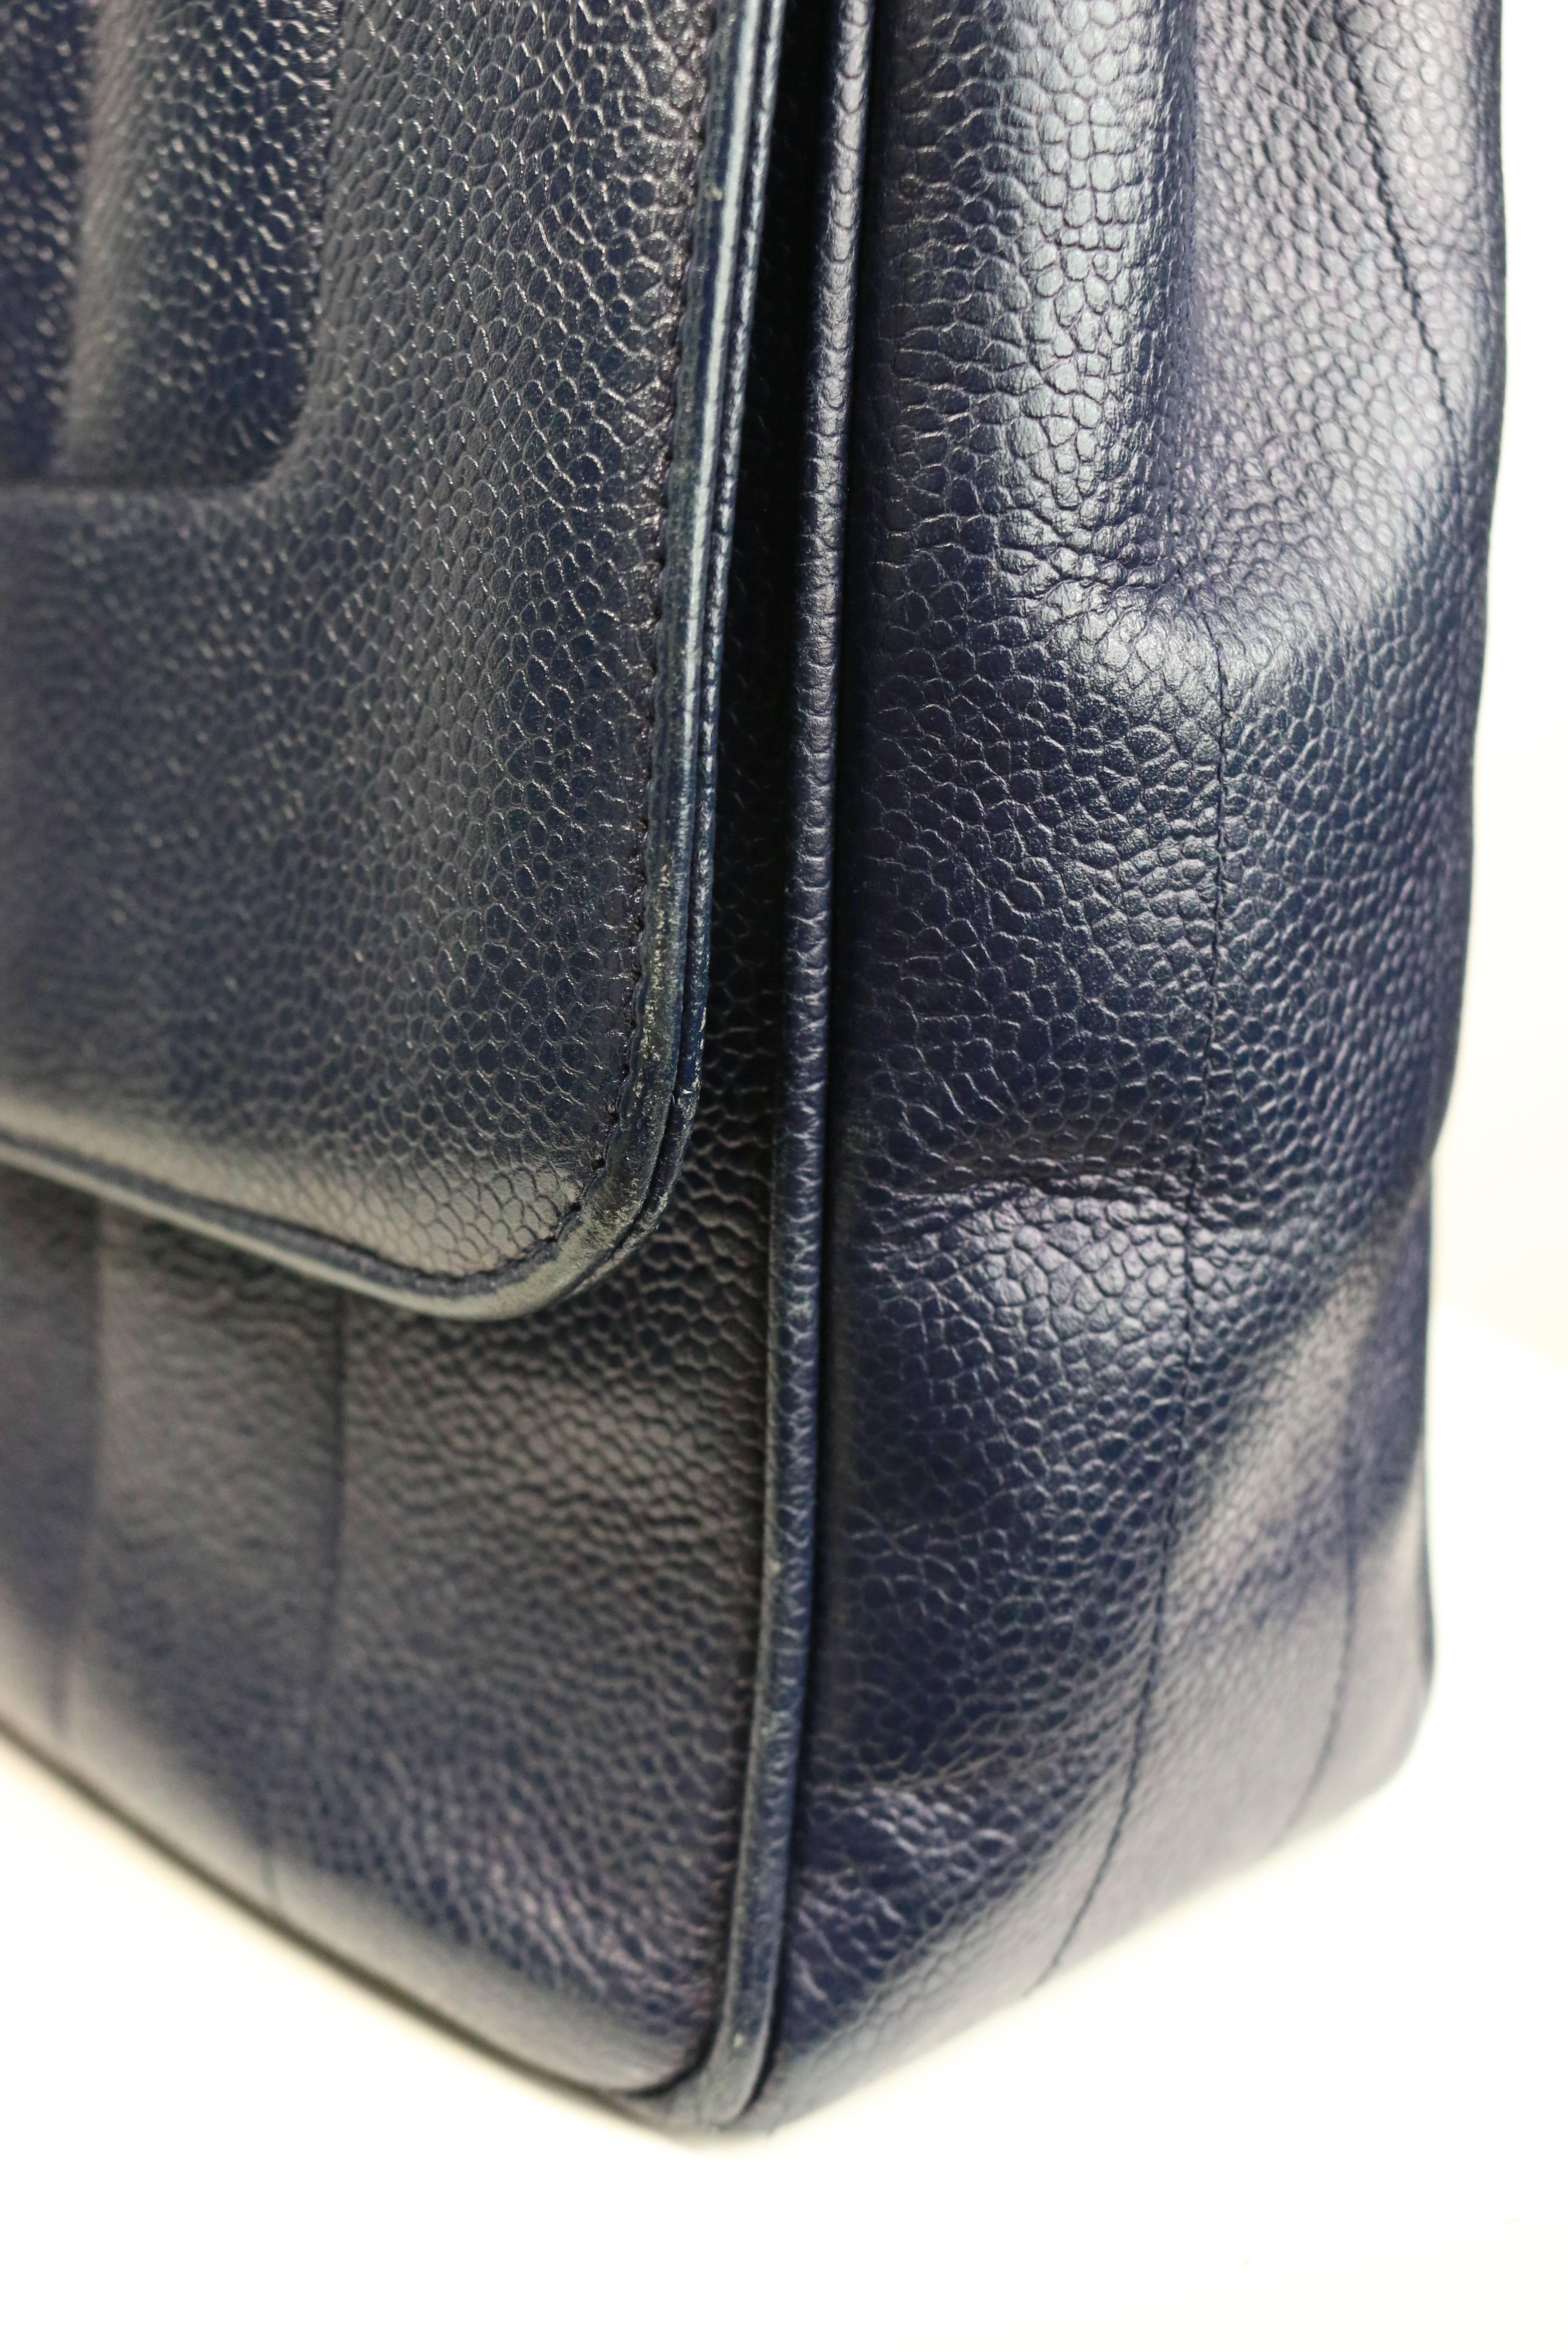 Women's Chanel Classic Navy Blue Caviar Leather Flap Handbag